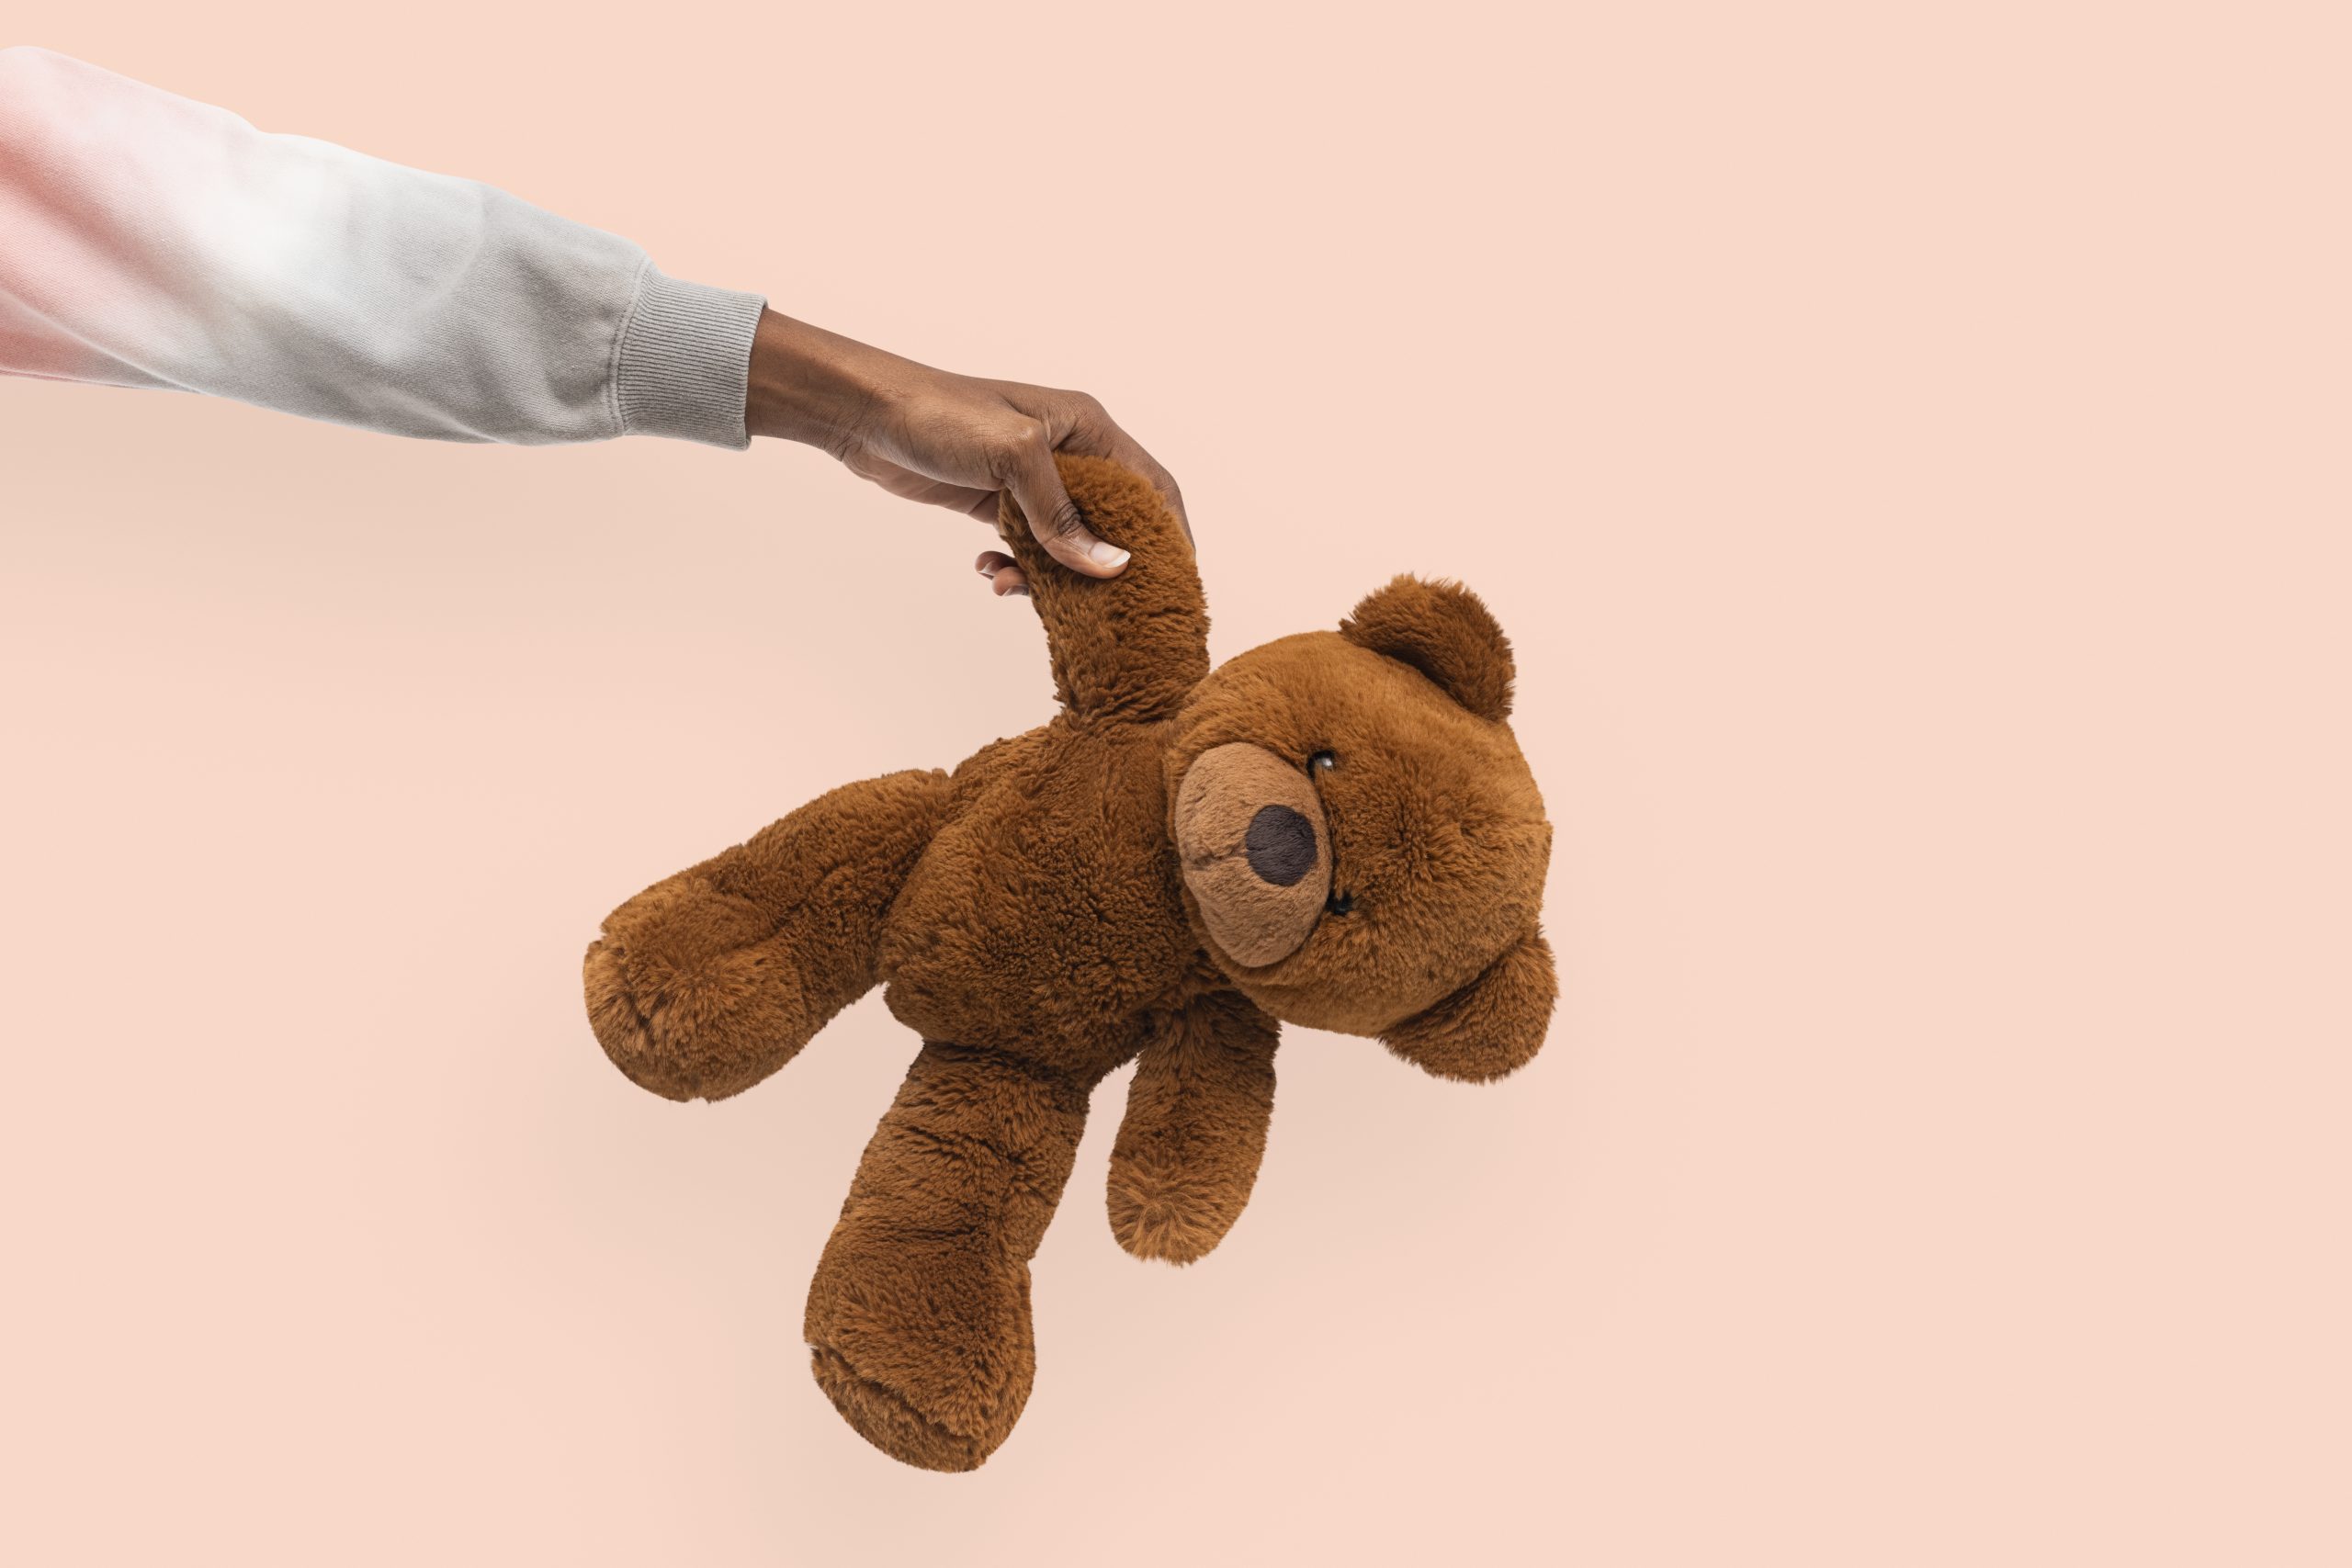 mainan boneka organik - Teddy bear held by a hand for charity campaign